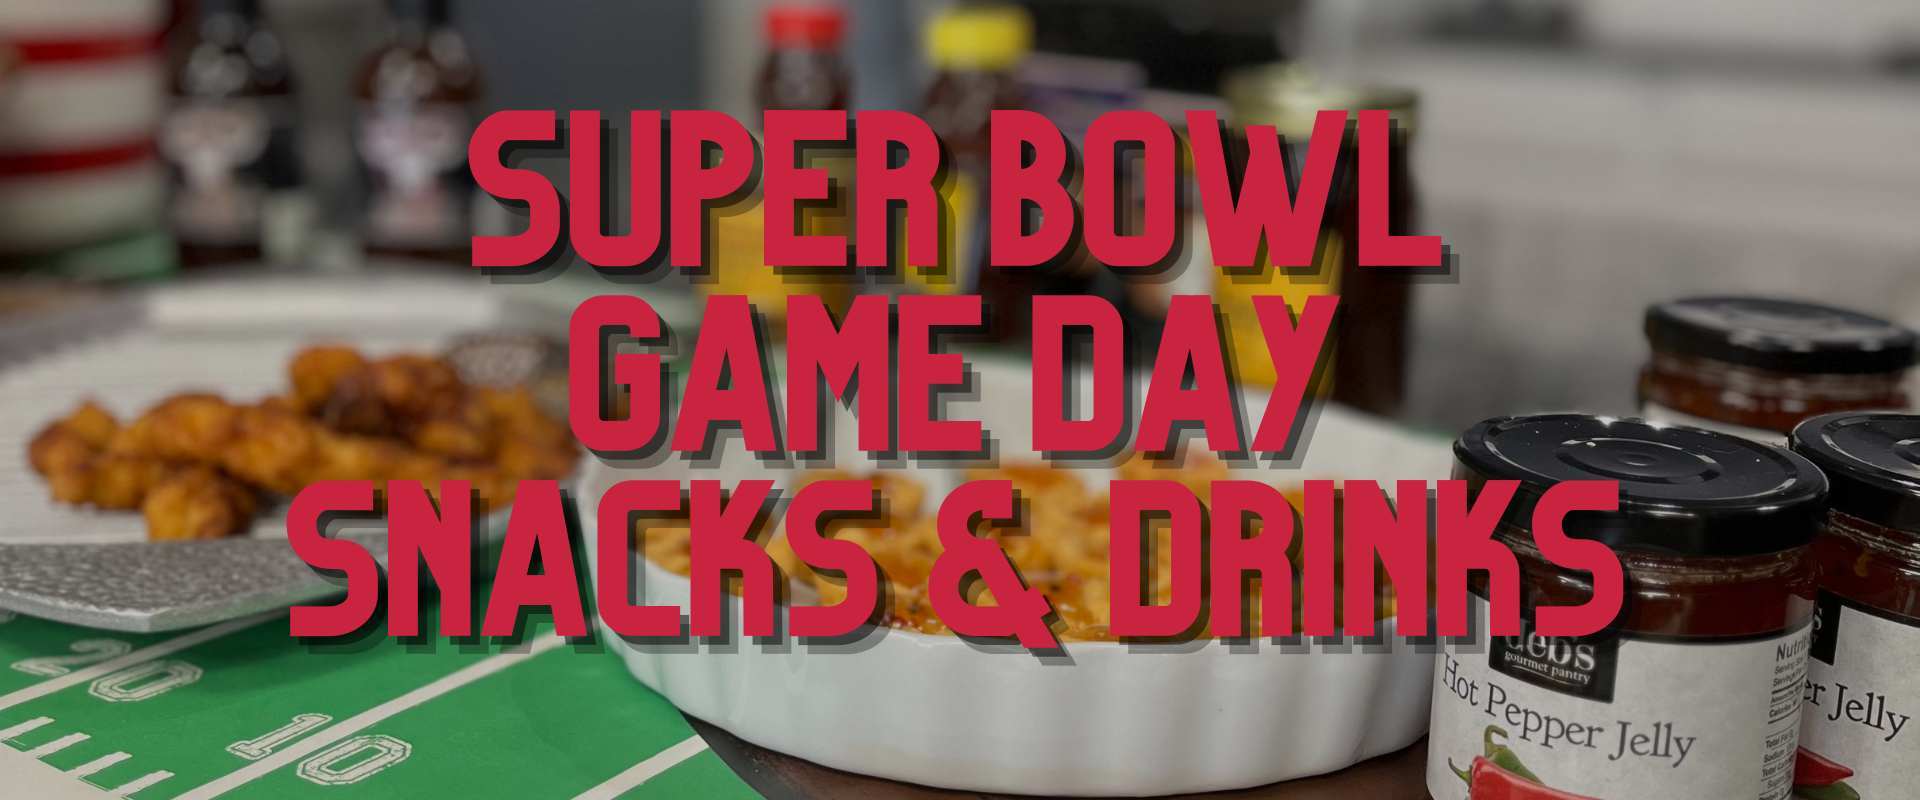 Super Bowl Game Day Snacks & Drinks banner